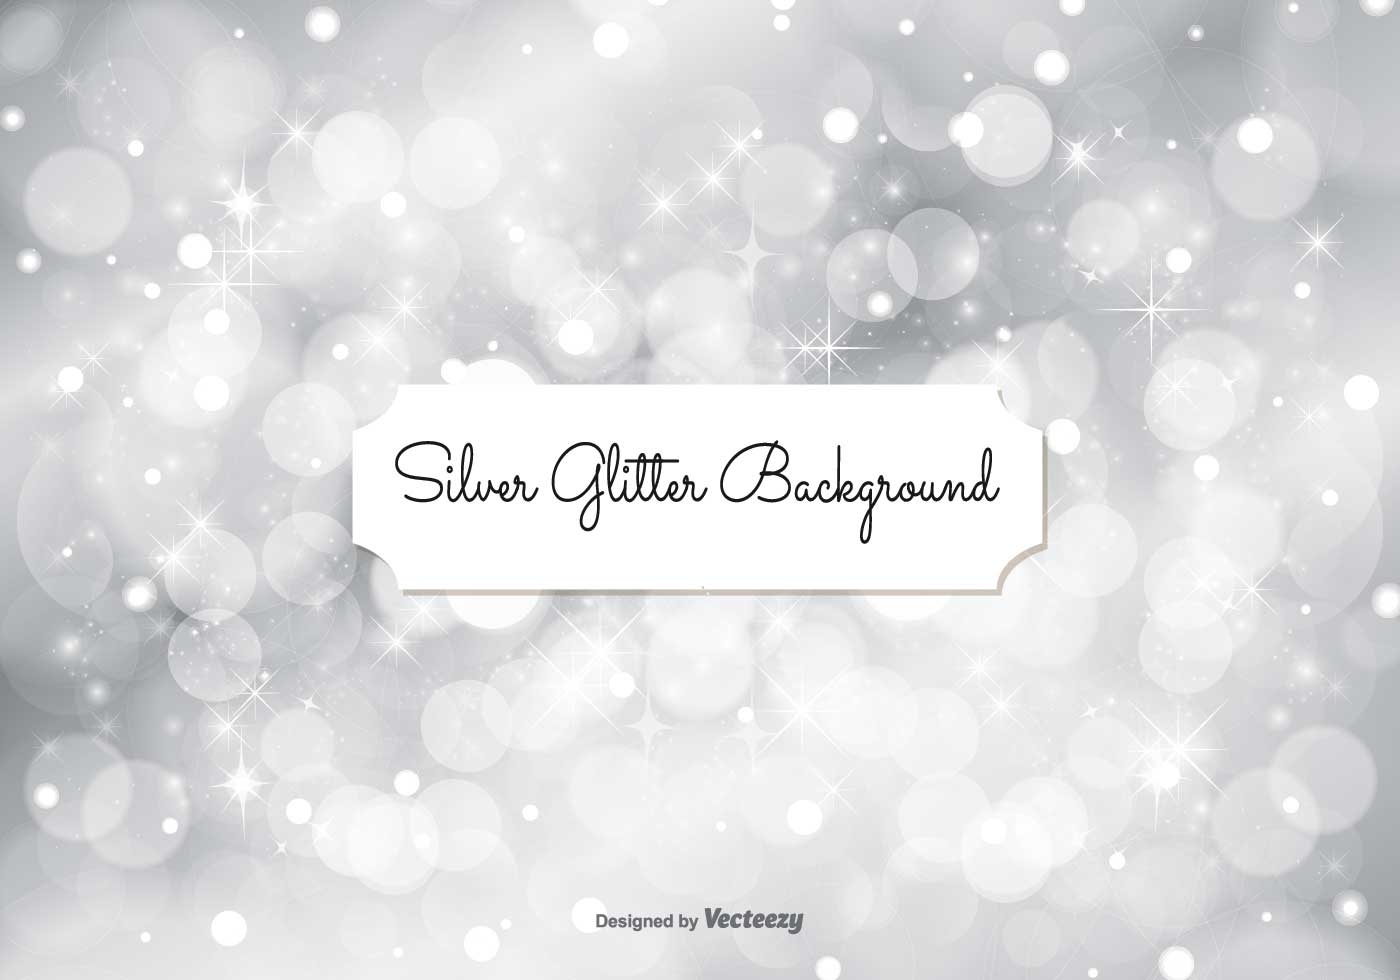 Silver Glitter Background Illustration Free Vector Art